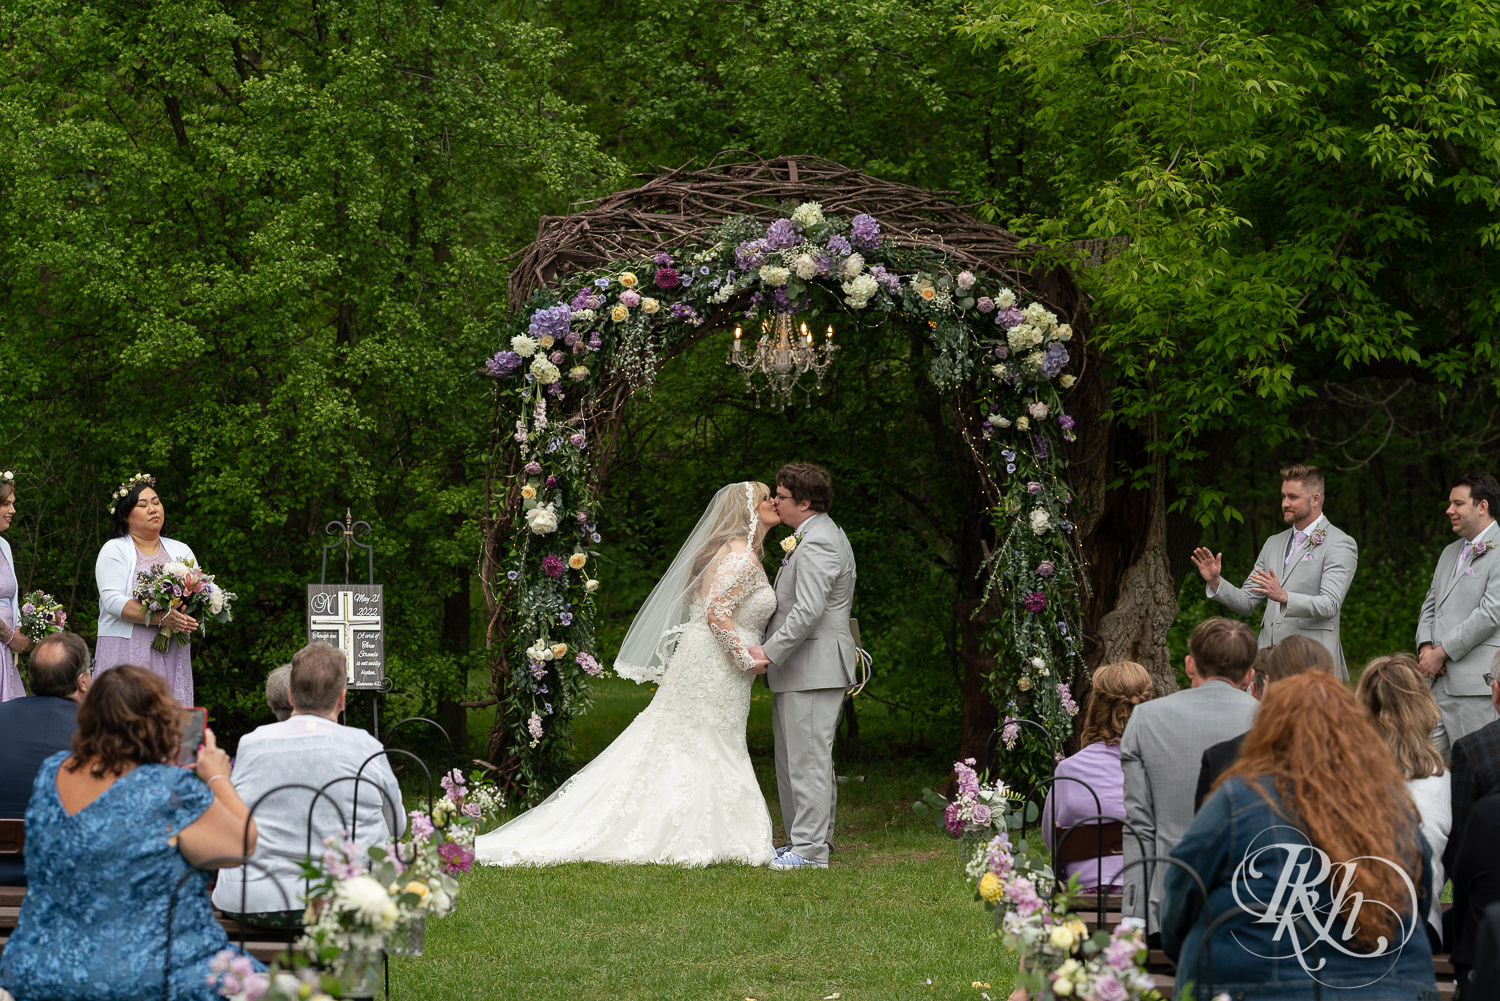 Outdoor summer wedding ceremony at Hope Glen Farm in Cottage Grove, Minnesota.